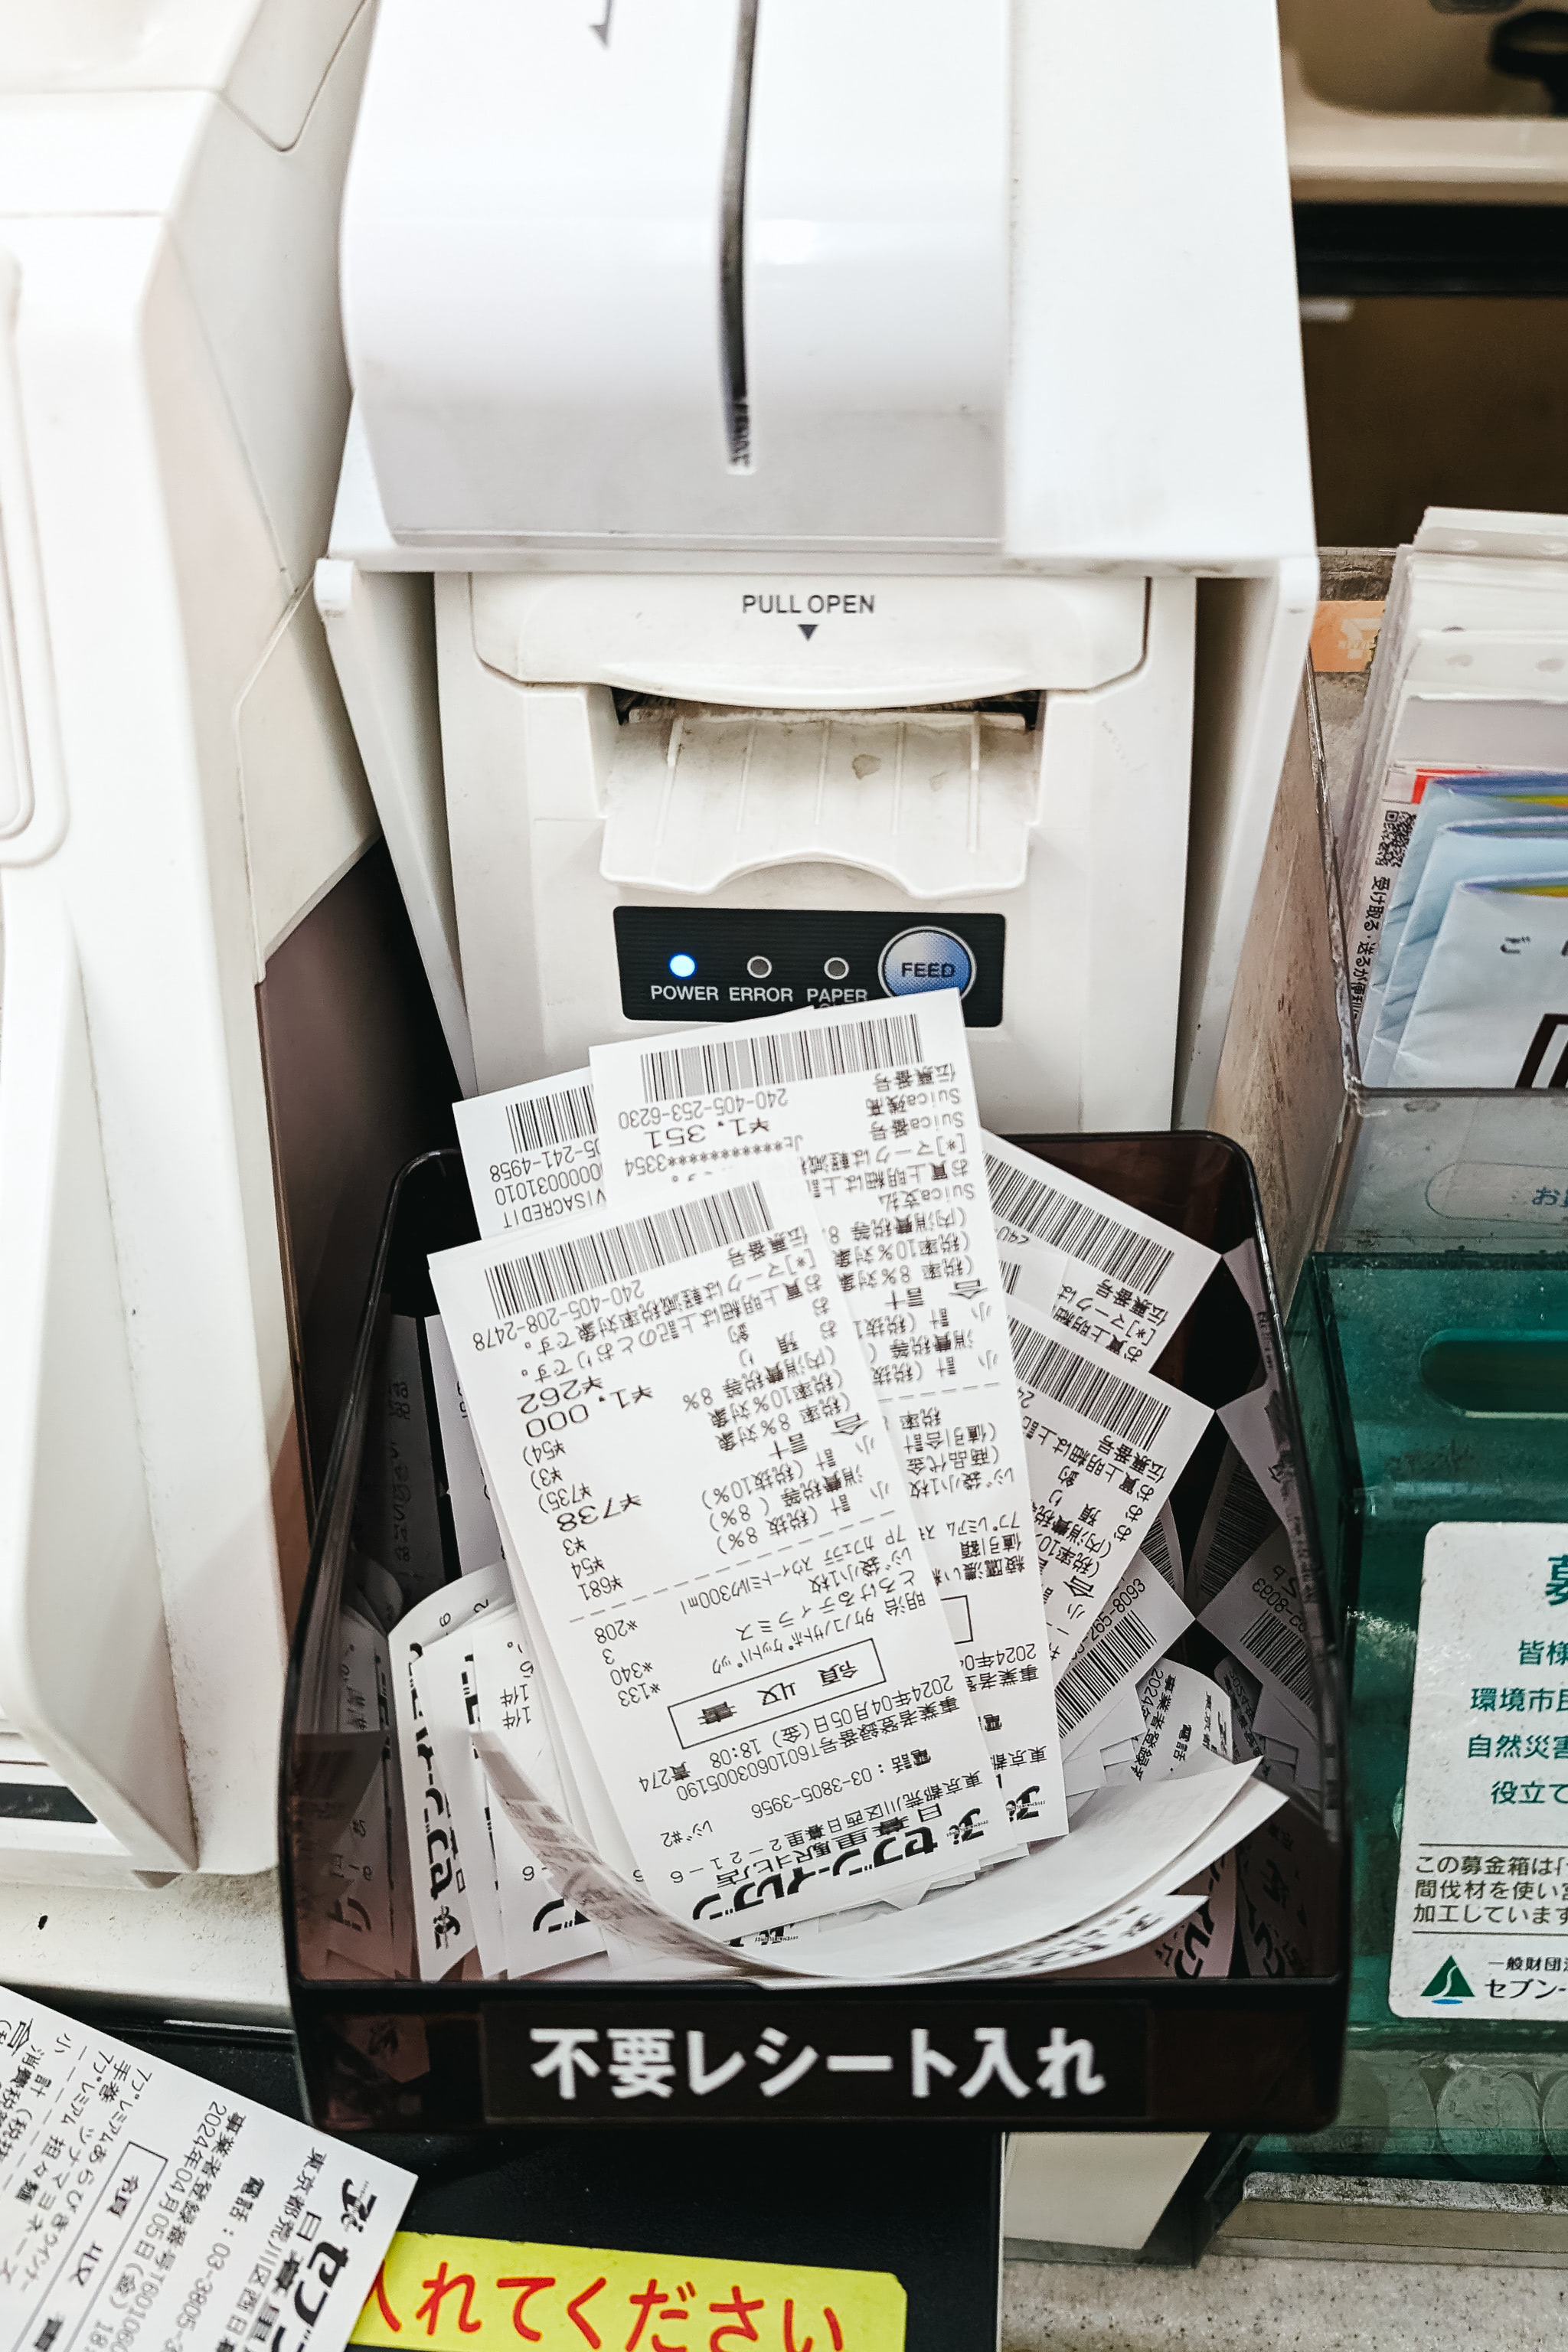 japan-receipt-printer-trash